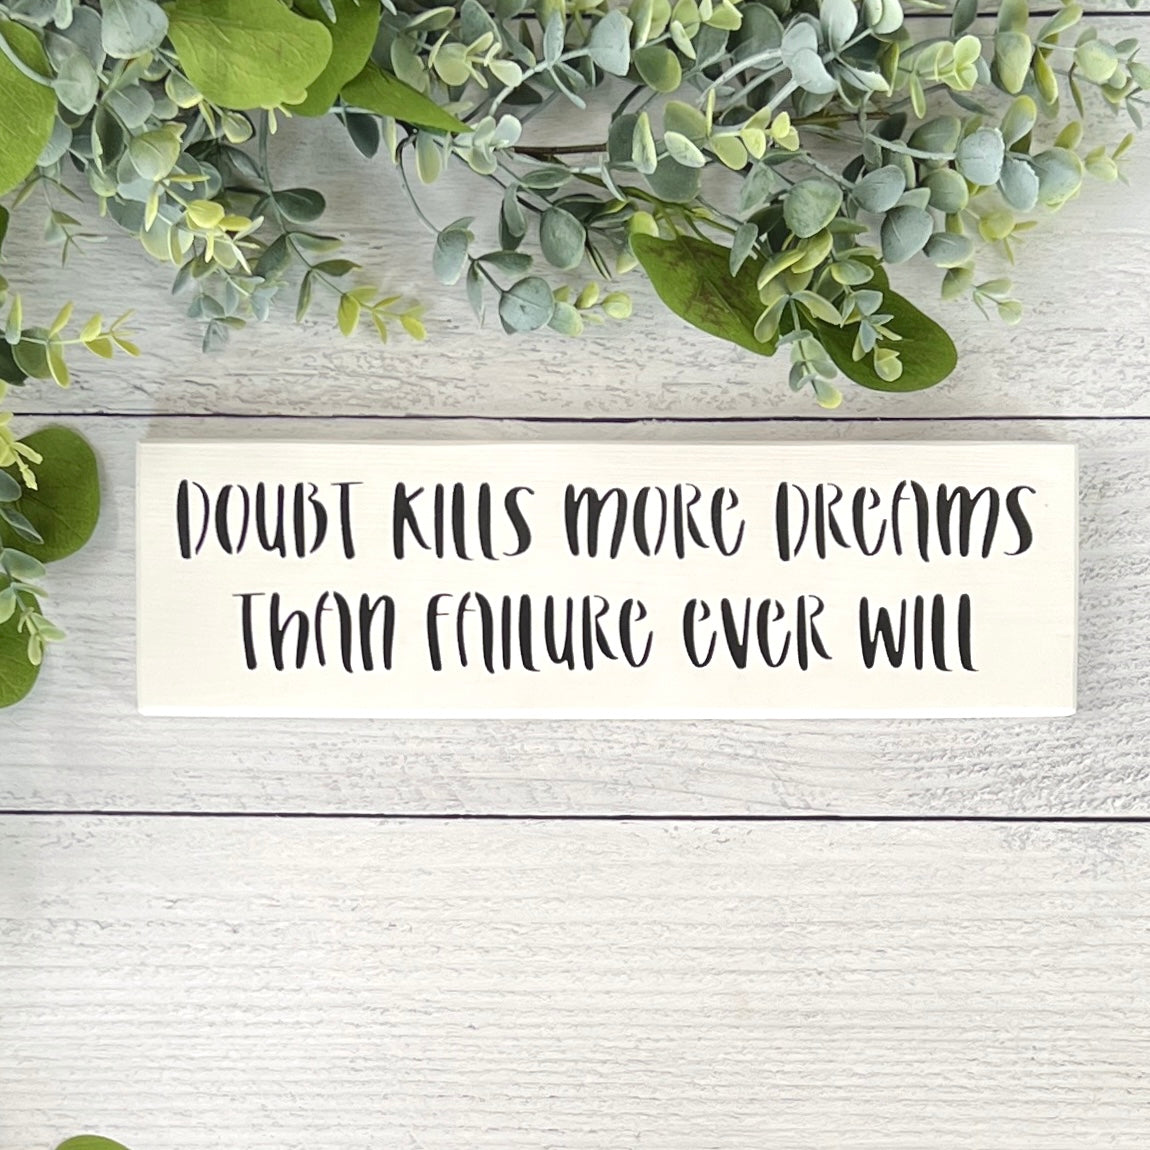 Doubt Kills More dreams - Inspirational Small Wood Sign